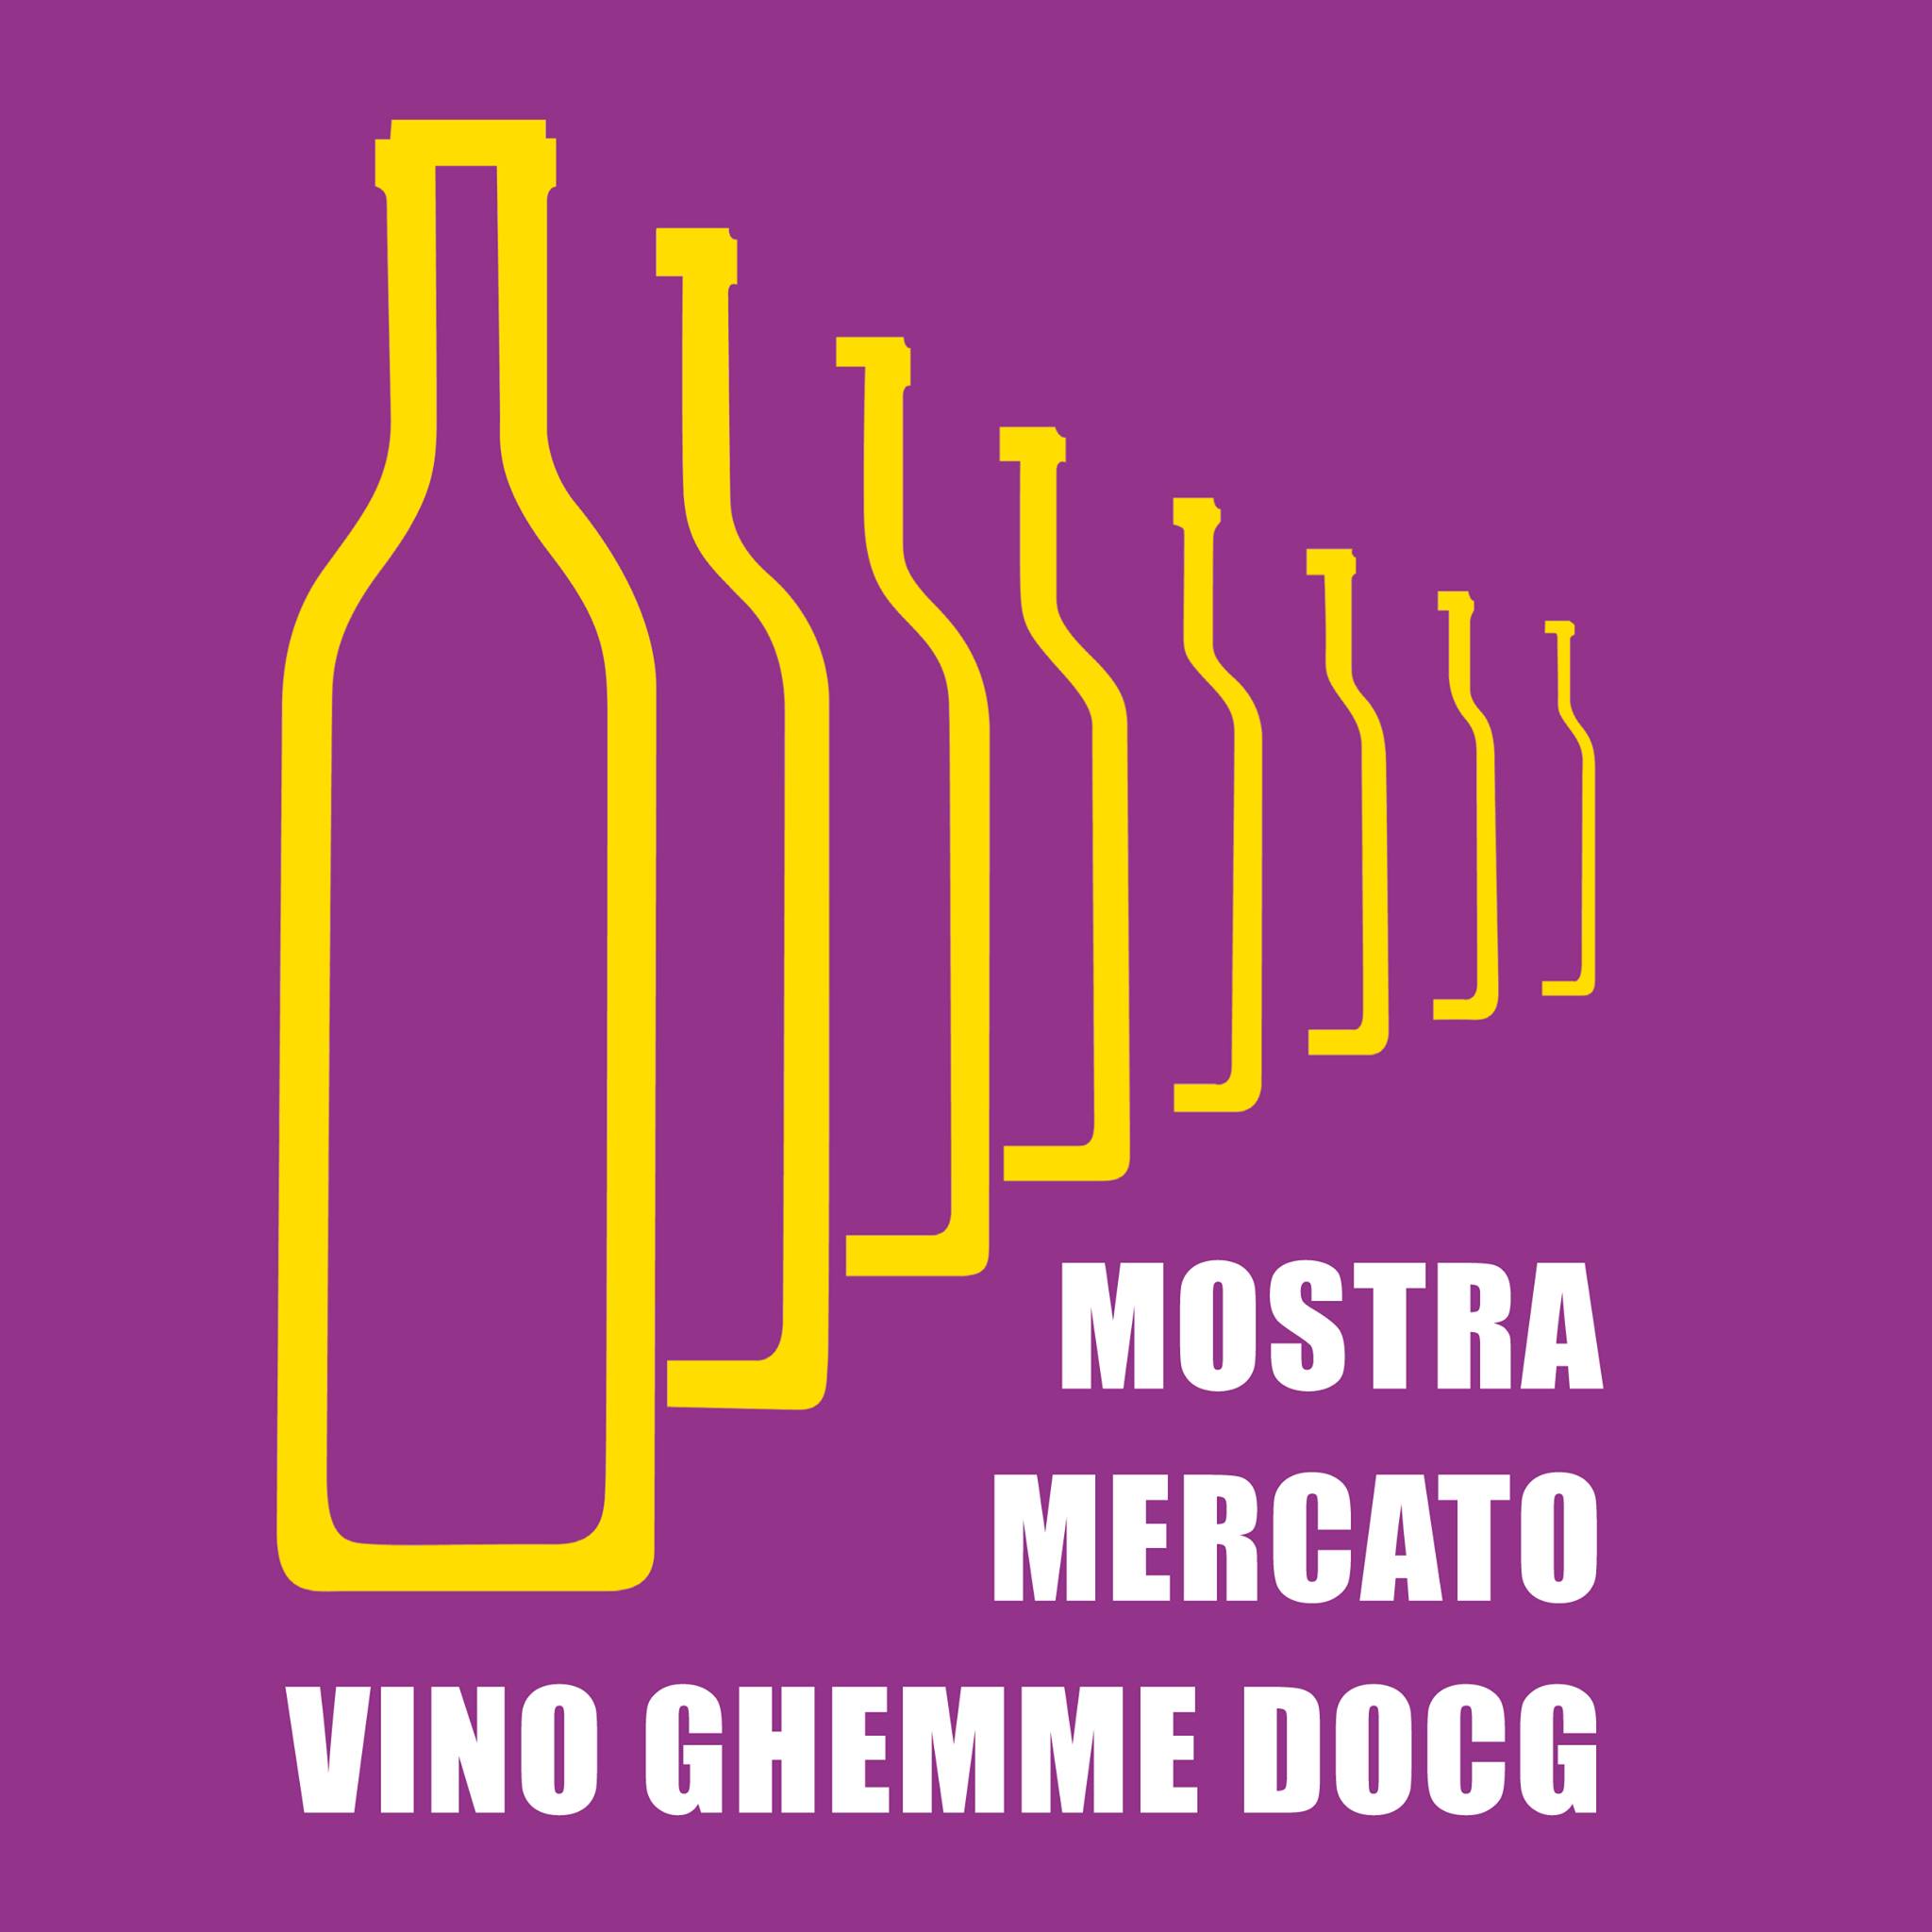 Mostra Mercato del Vino Ghemme DOCG - 52° Ed.